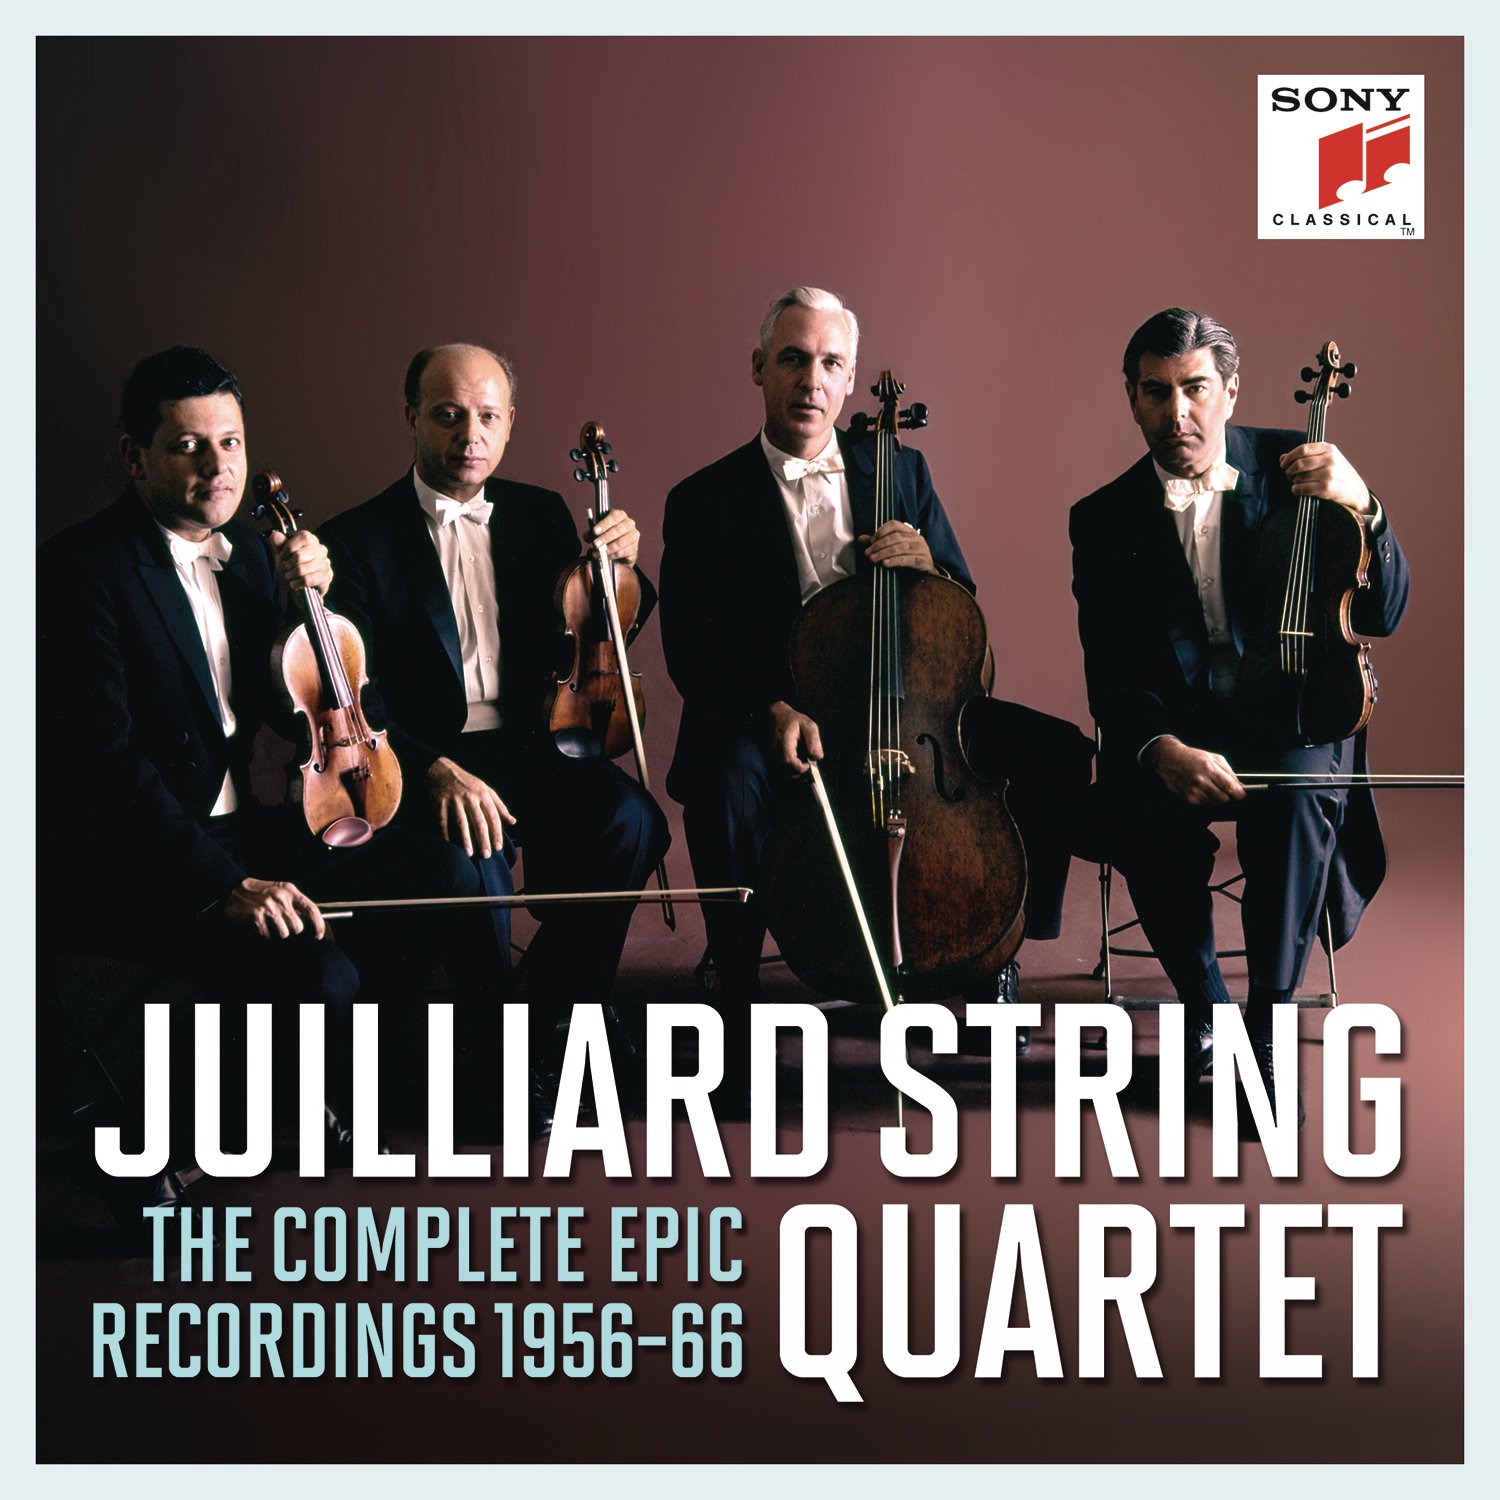 Complete Epic Recordings - Box Set | JUILLIARD STRING QUARTET